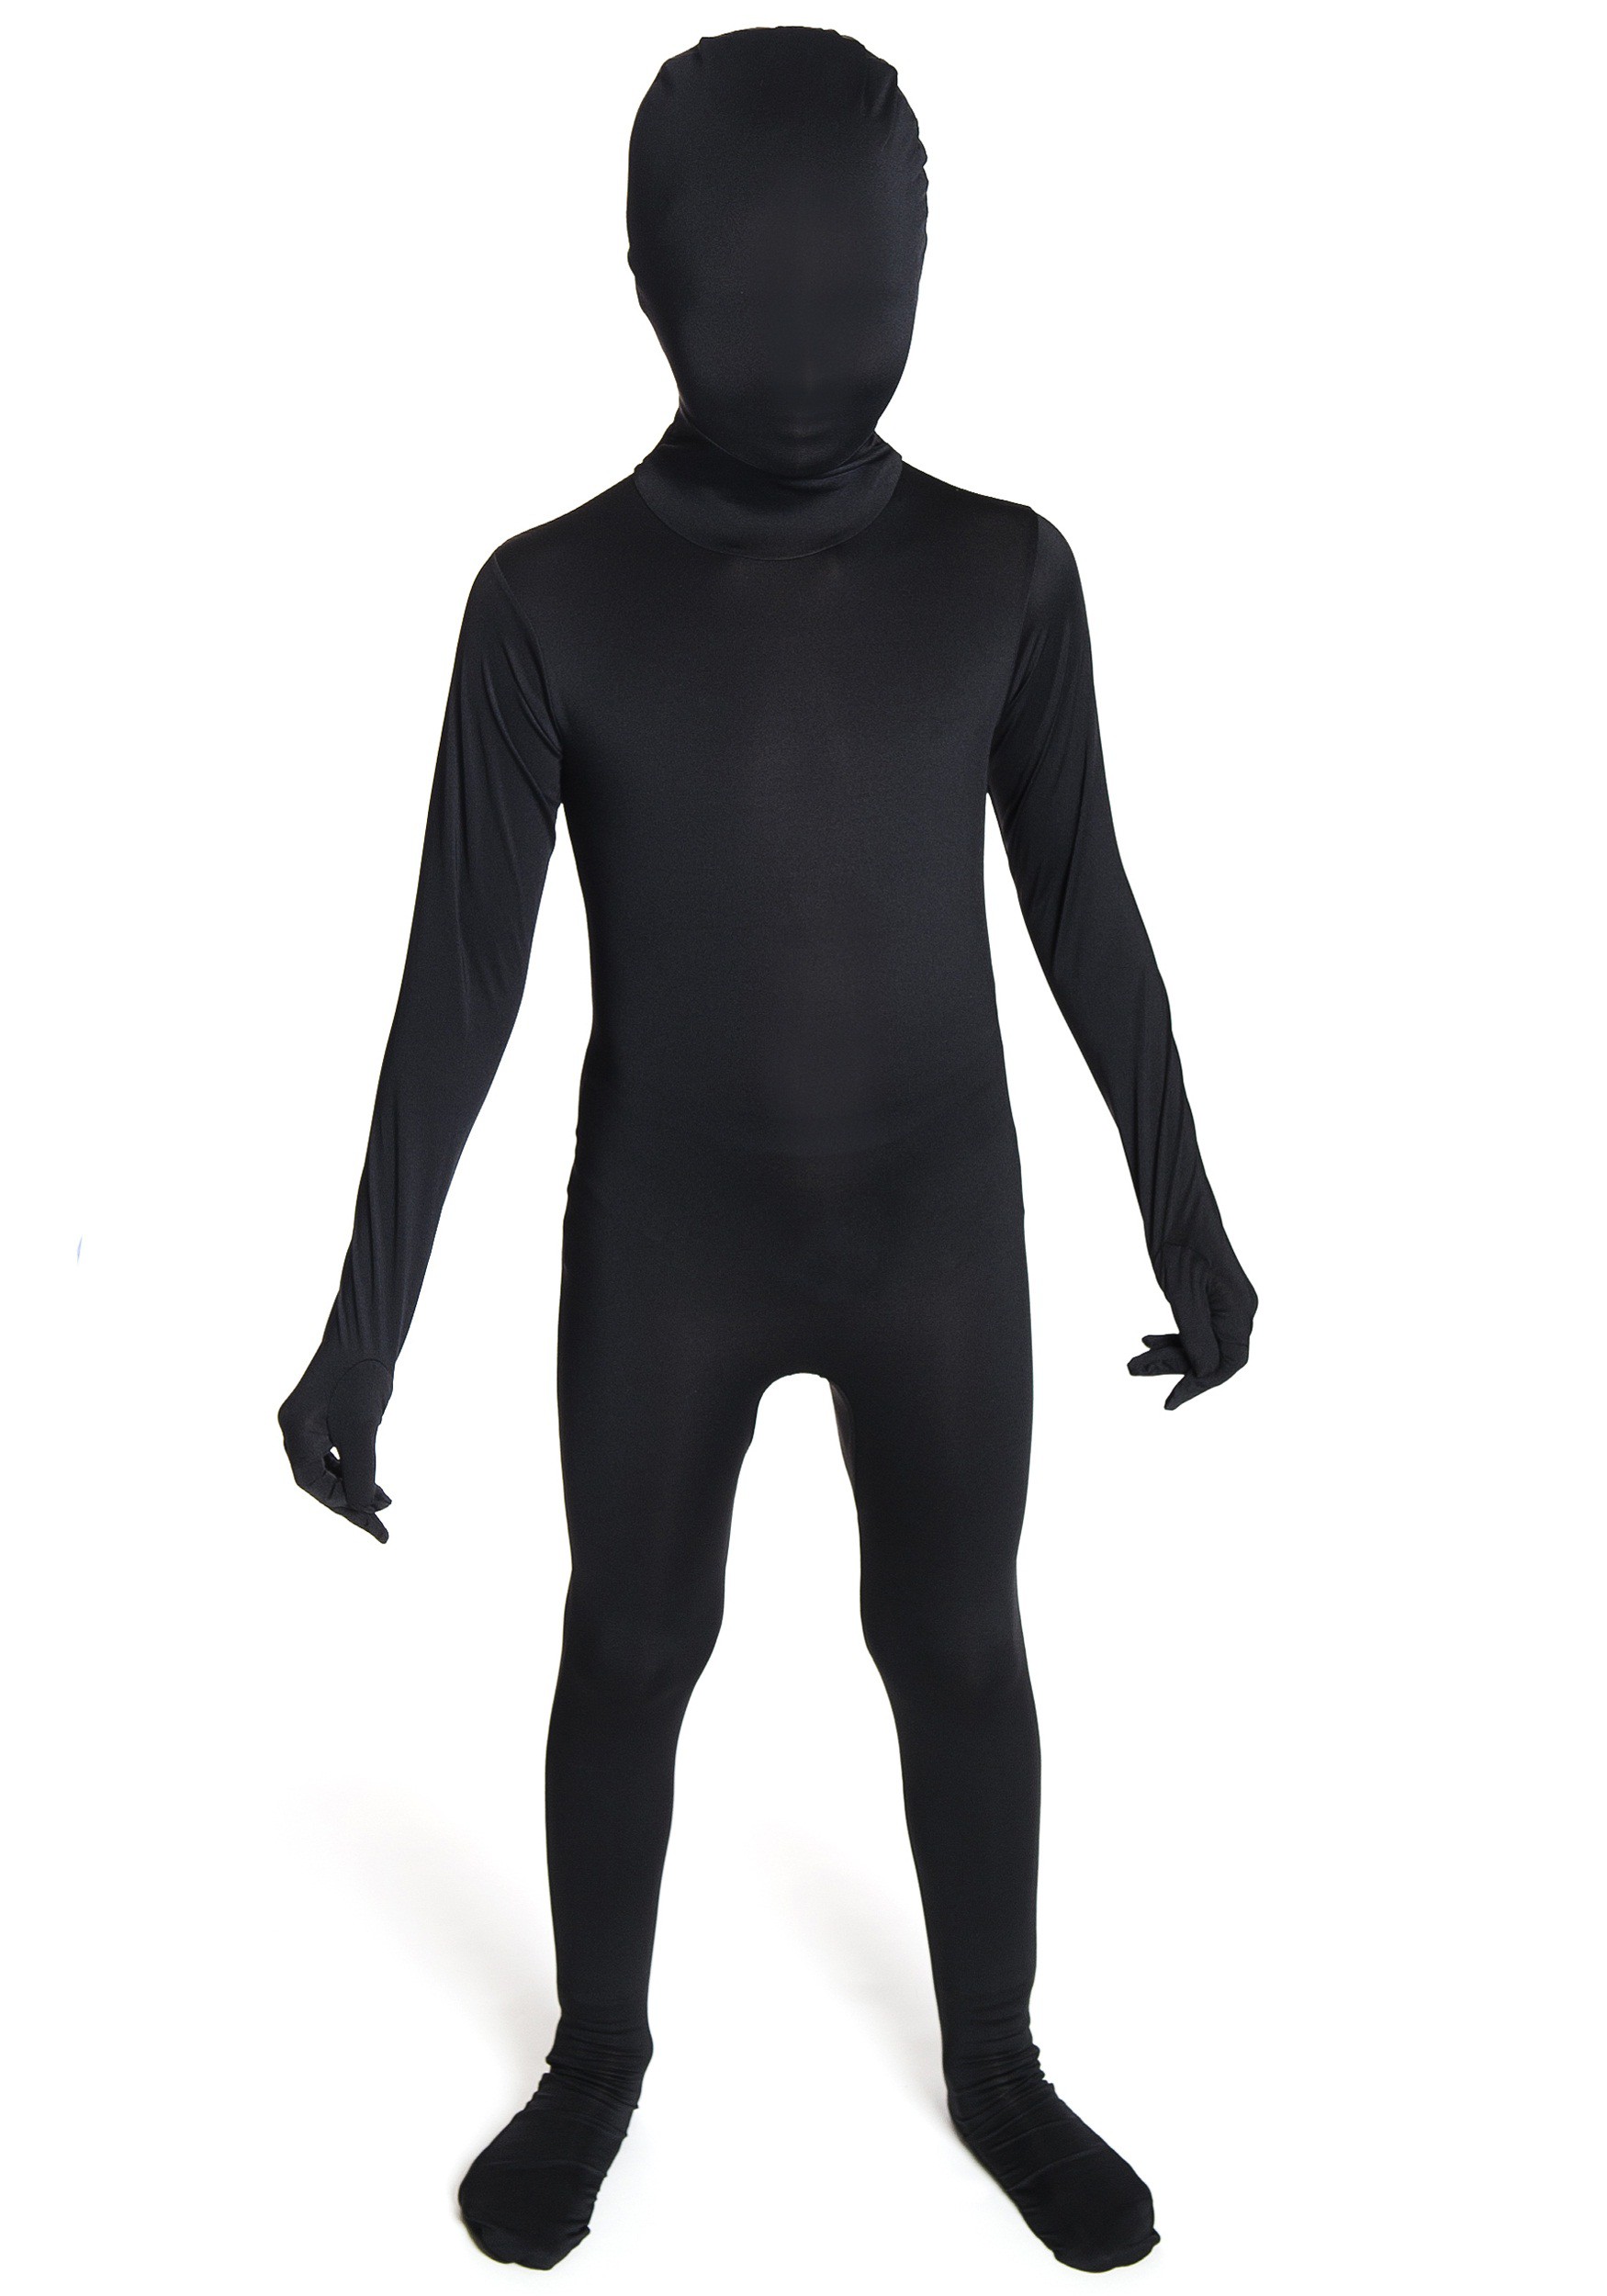 Kid's Black Morphsuit Costume